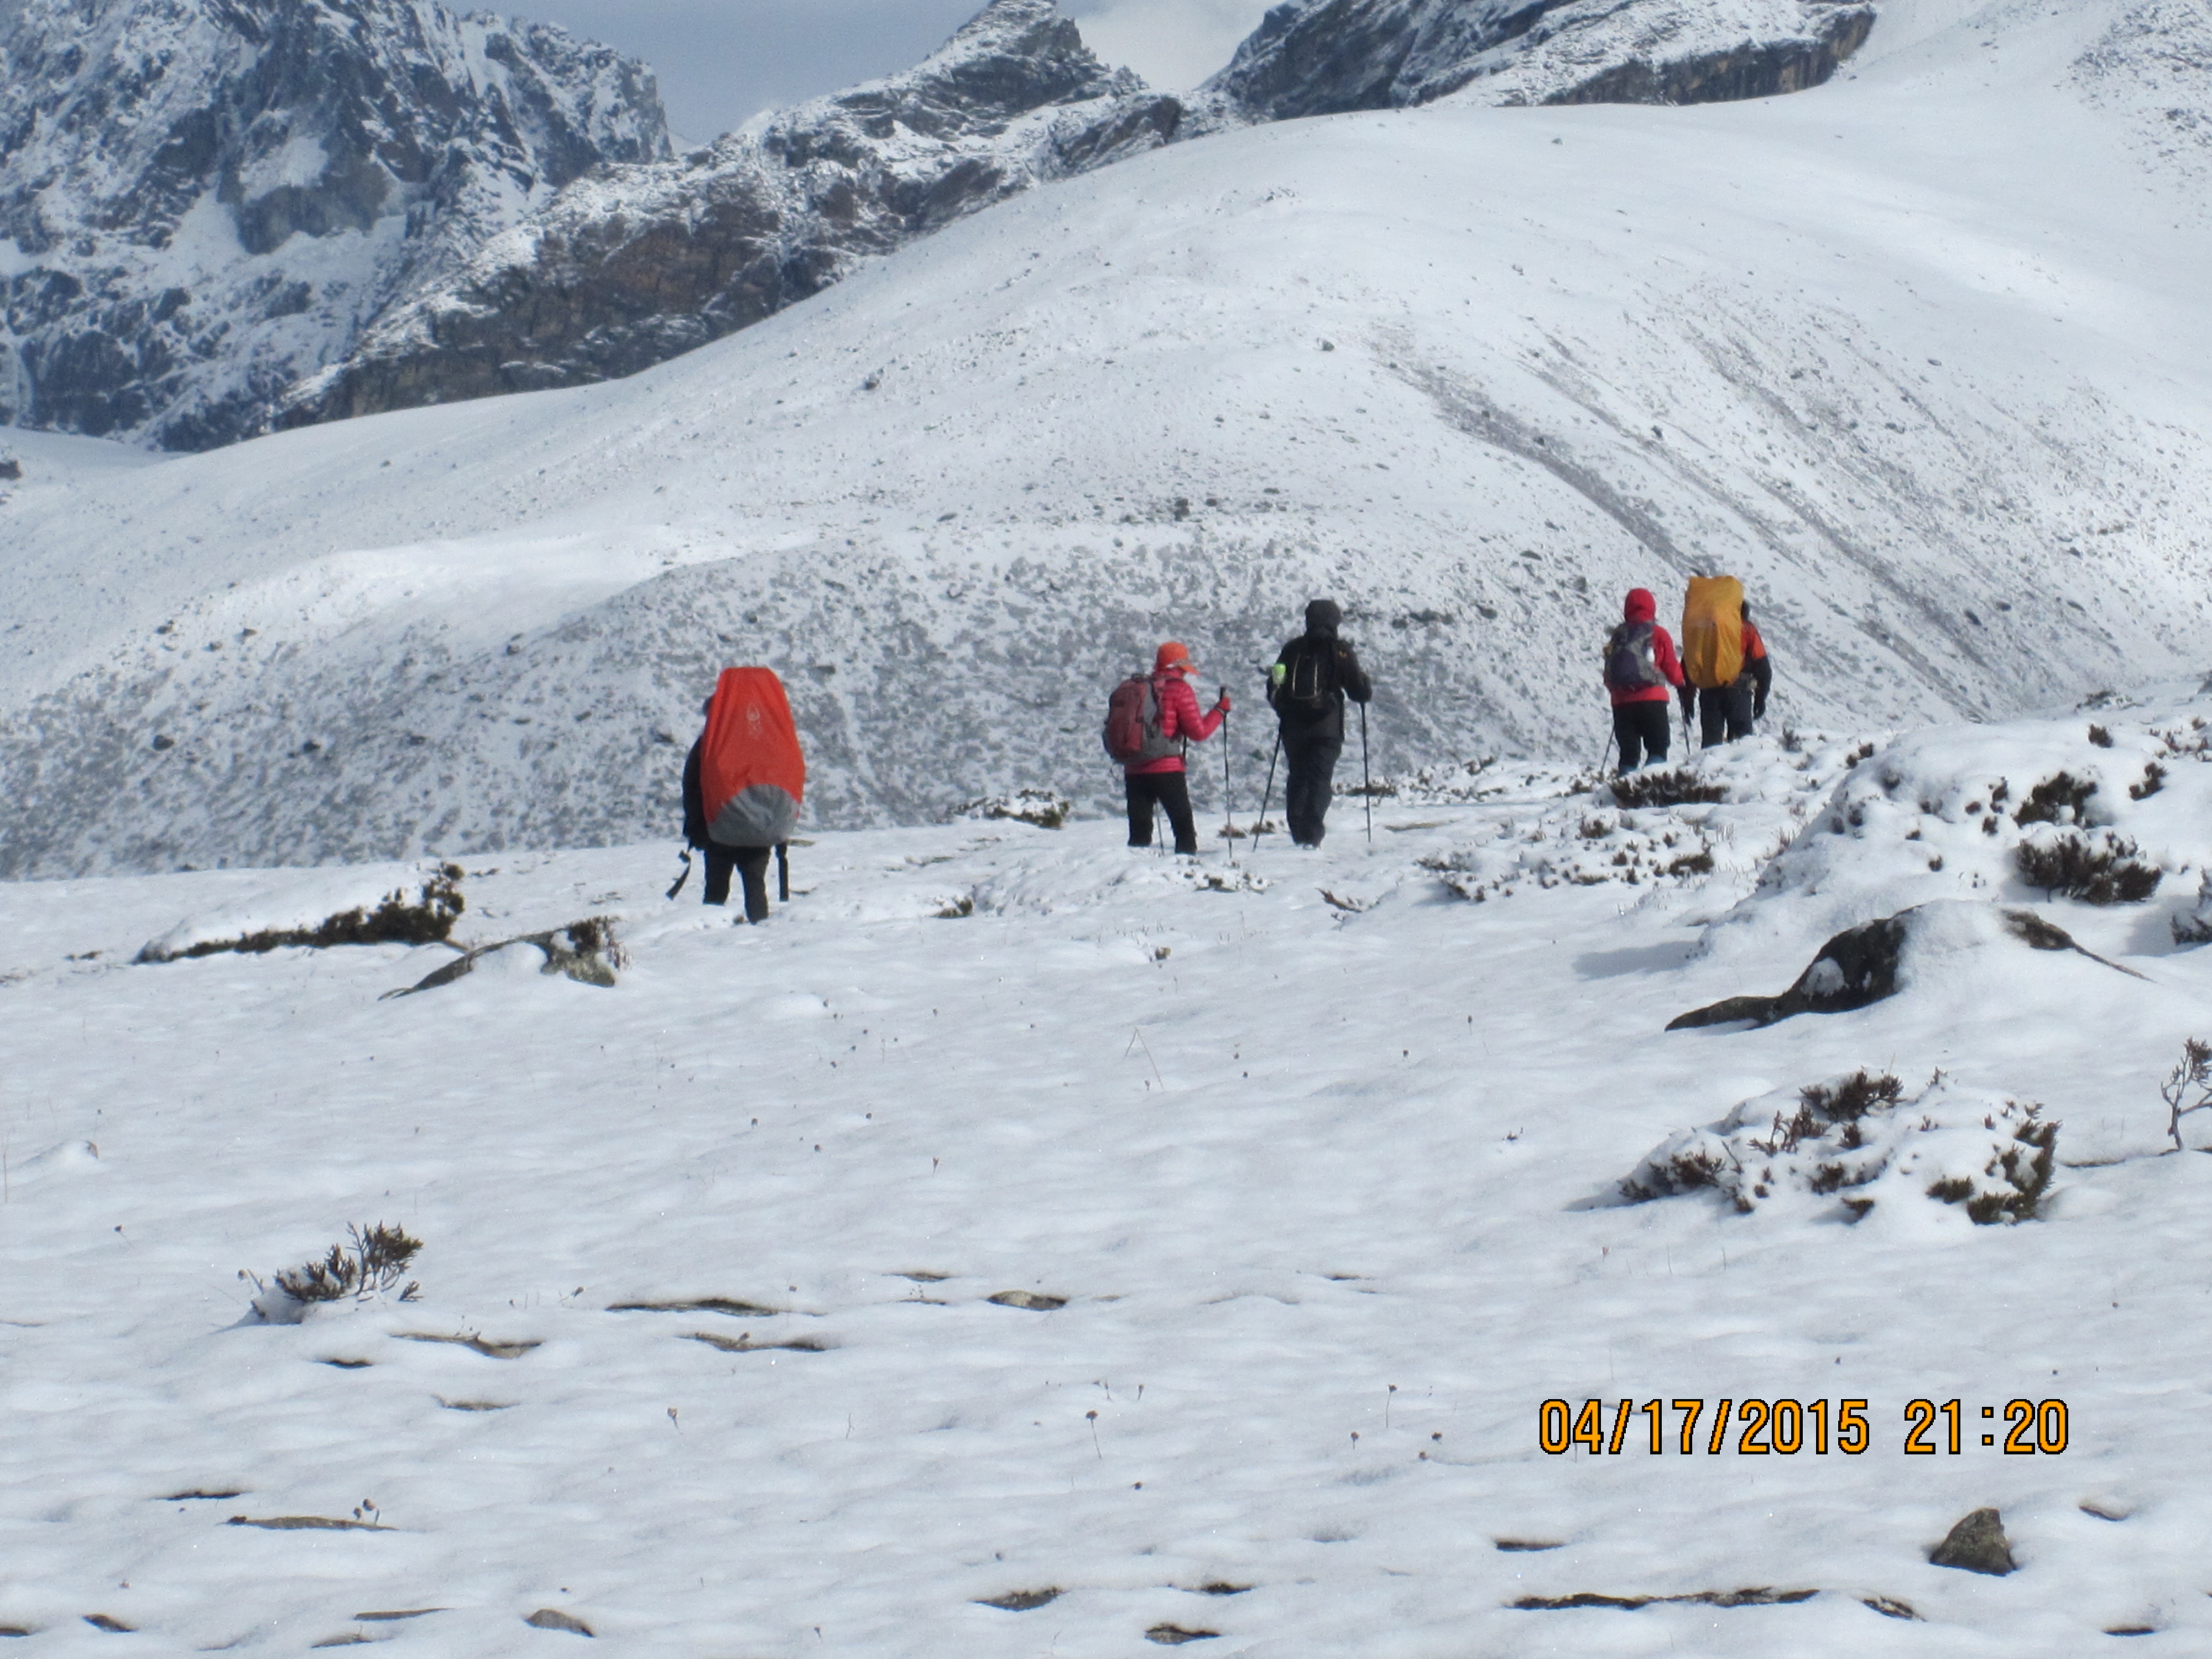 Everest as’ Snow bank’ trek